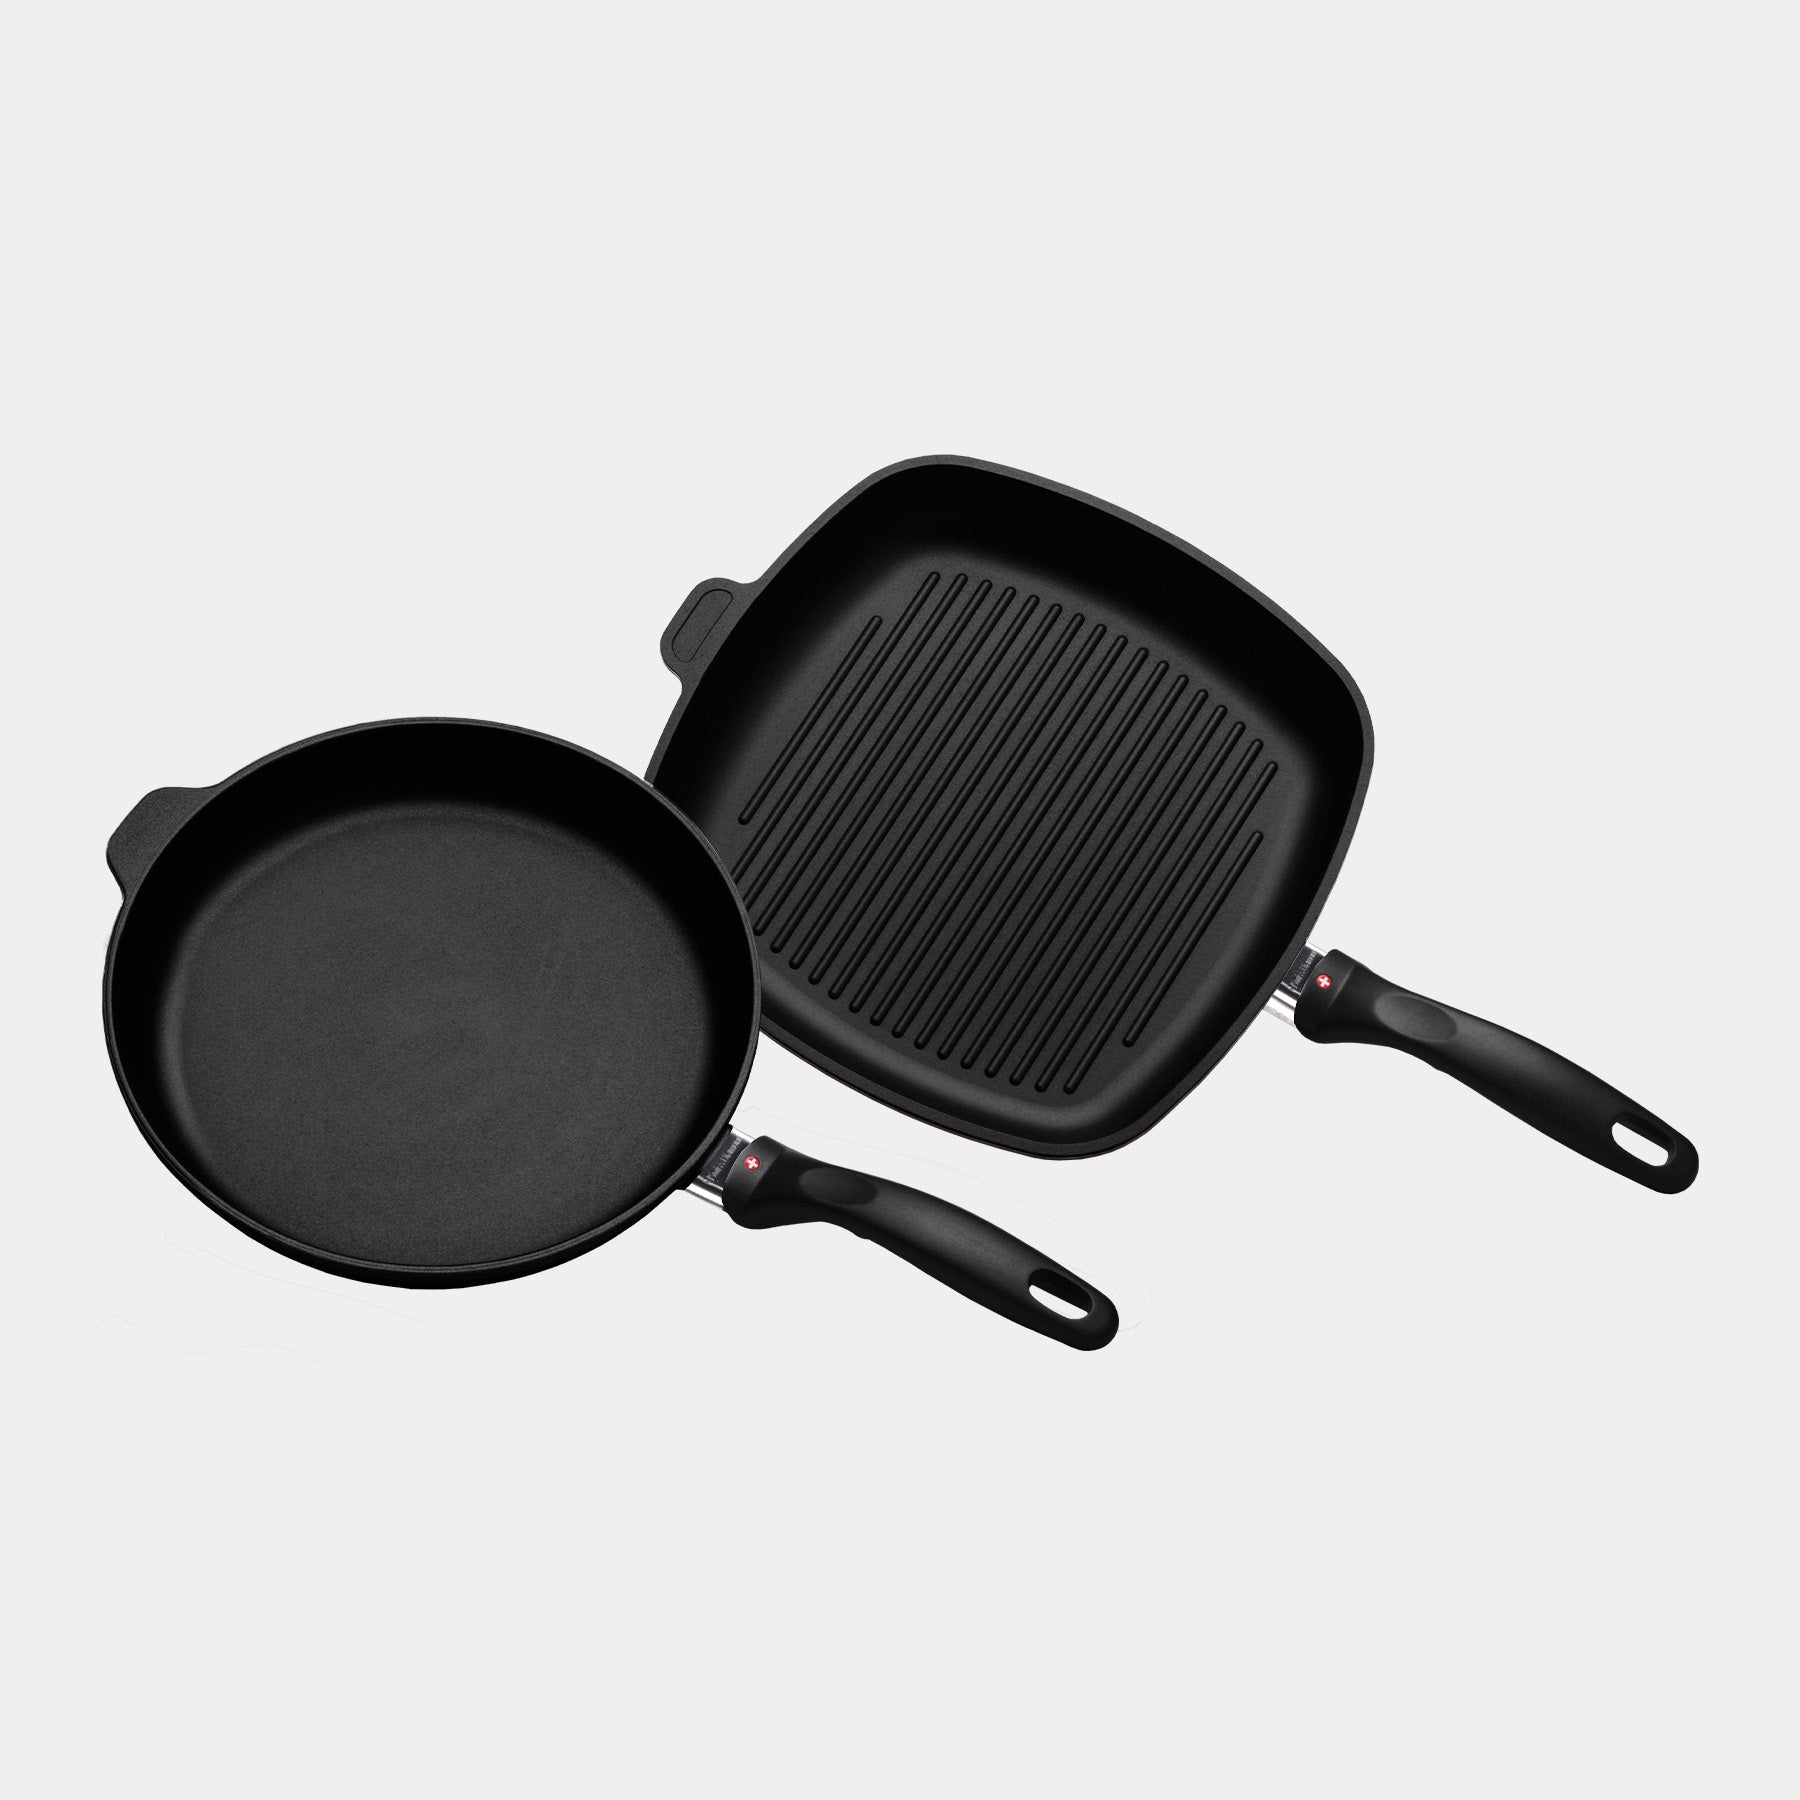 XD Nonstick 2-Piece Set - Fry Pan & Grill Pan - Induction